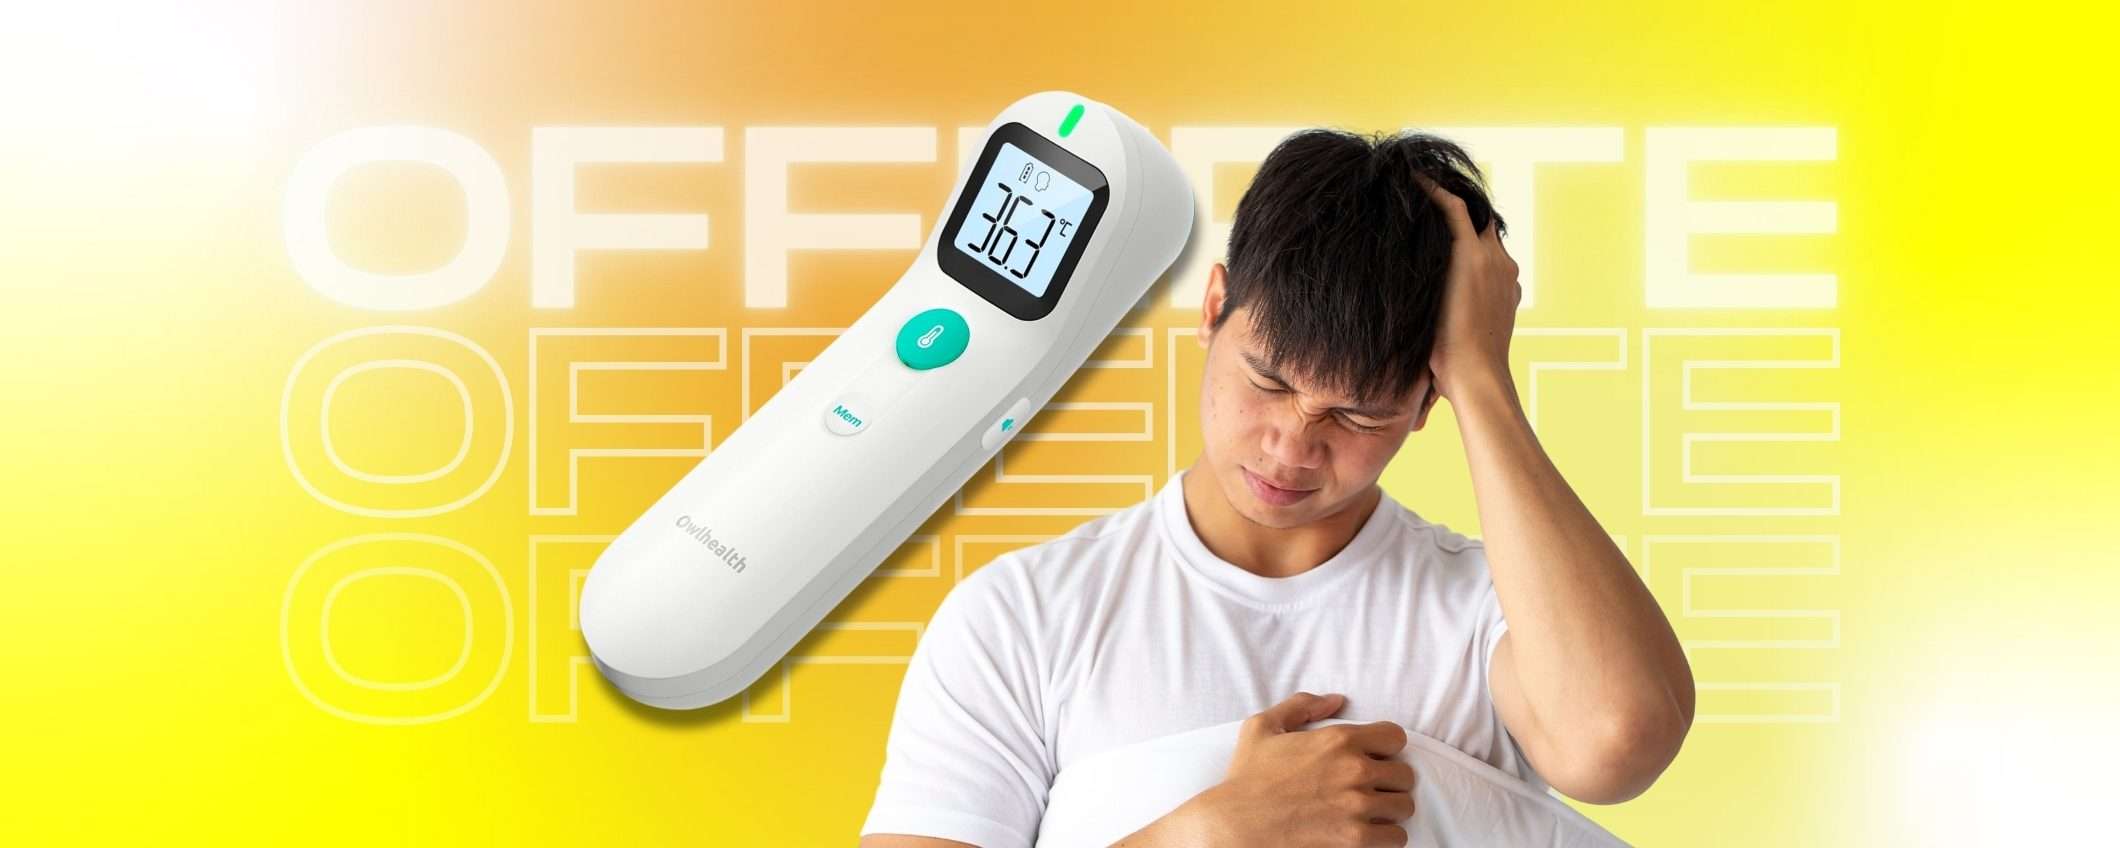 Influenza NON ti temo: termometro a infrarossi istantaneo (-13%)